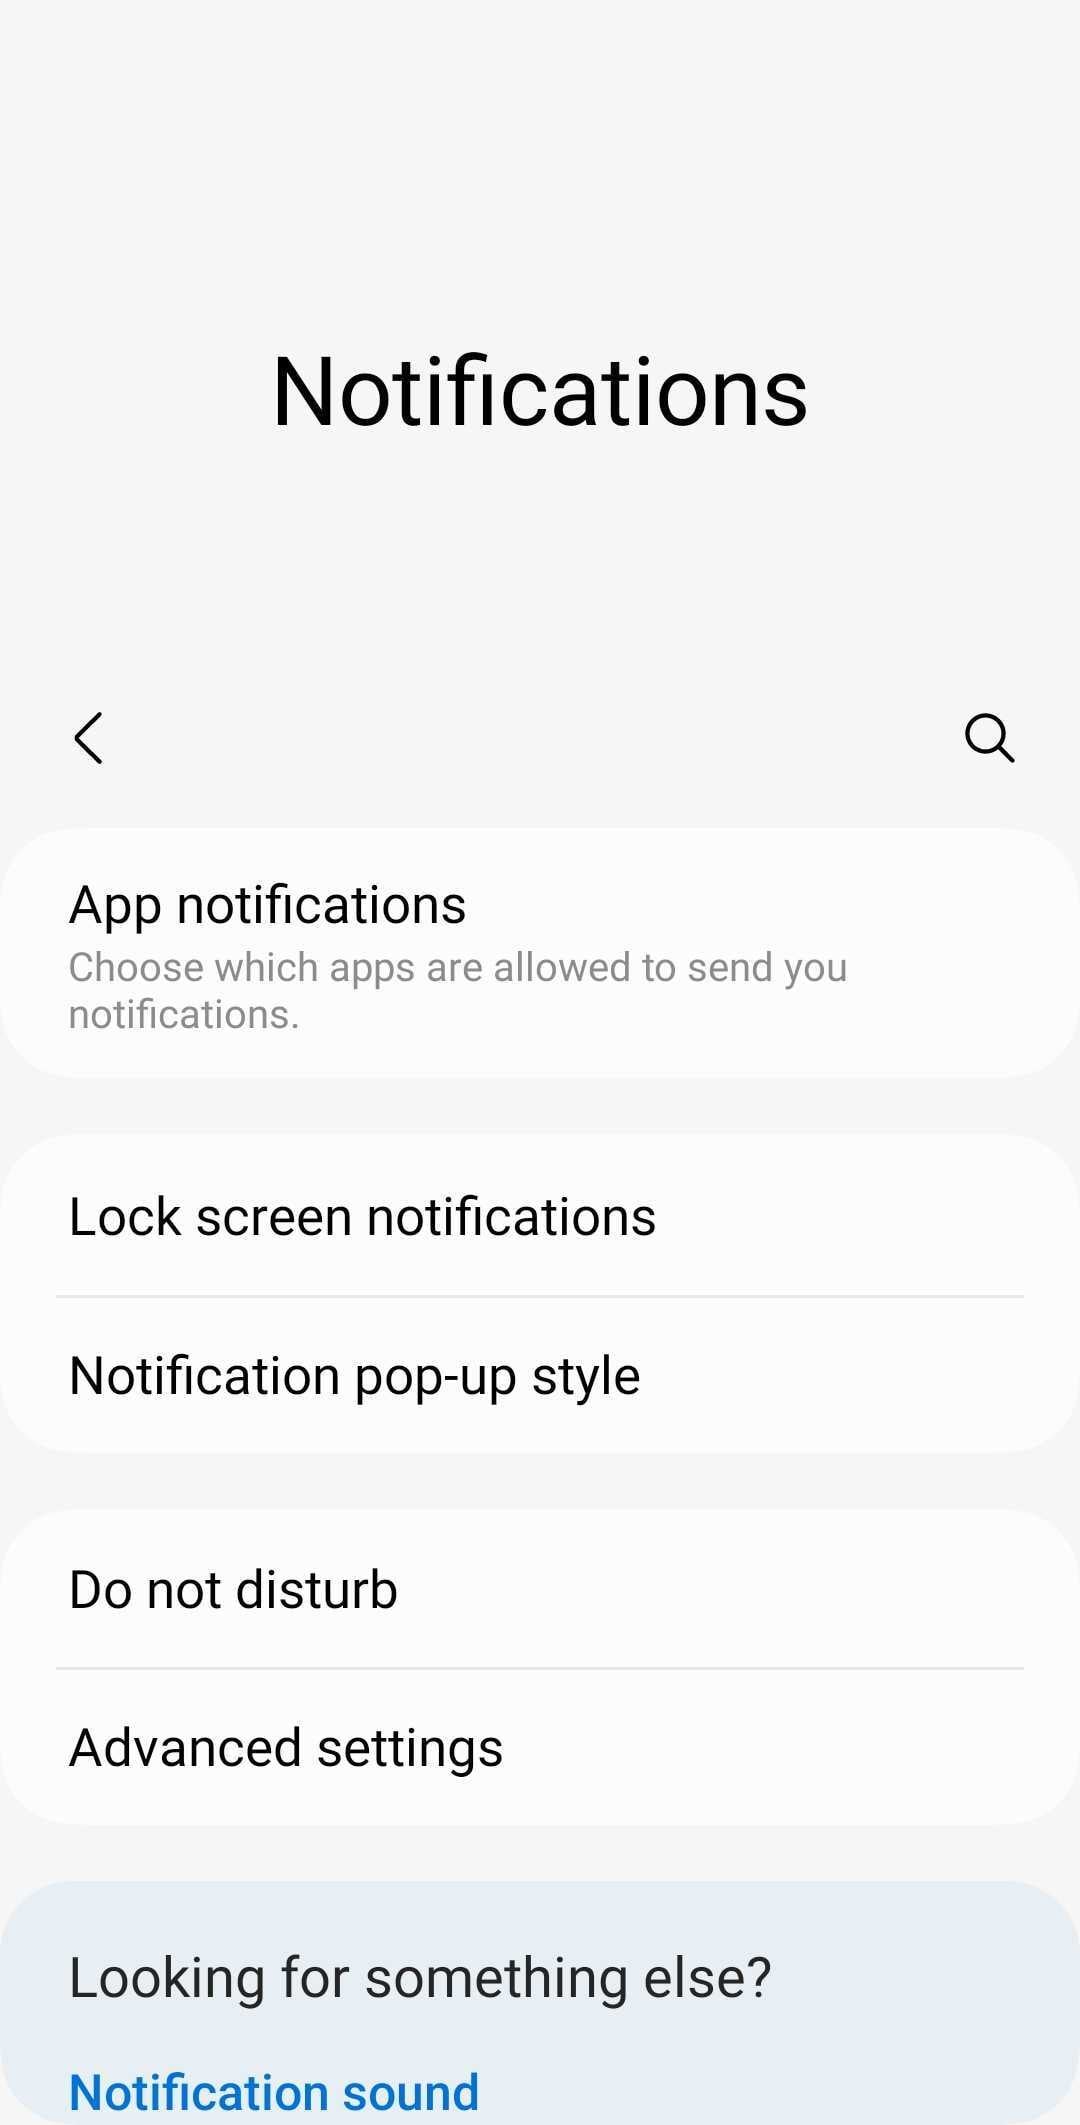 notifications settings interface